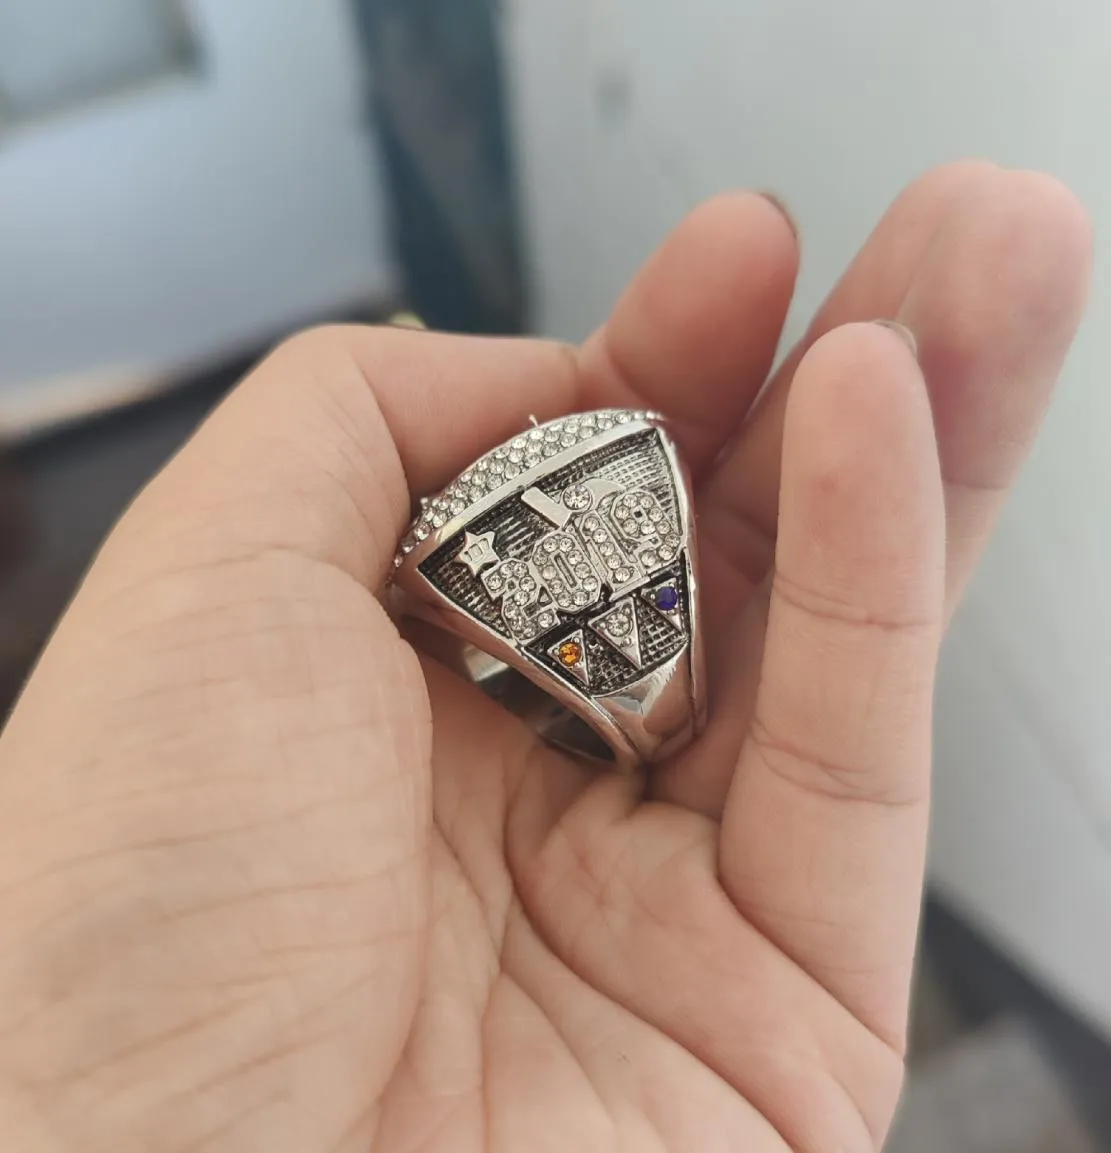 2020 Under Houston 2019 American League Altuve Brantley Championship Ring Men Fan Brithday Gift Whole 2869788